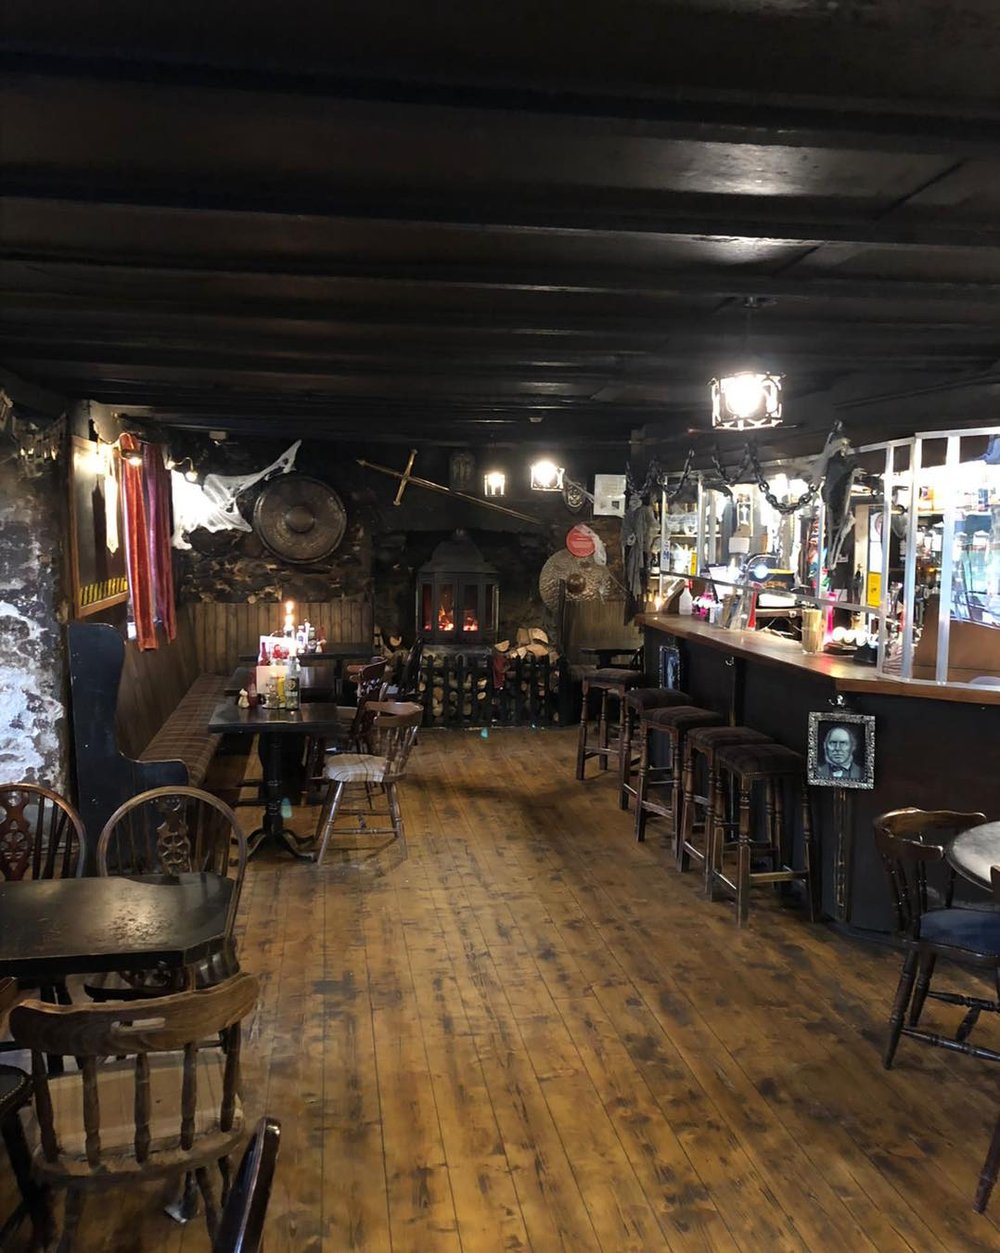 The Bar in the Drover's Inn